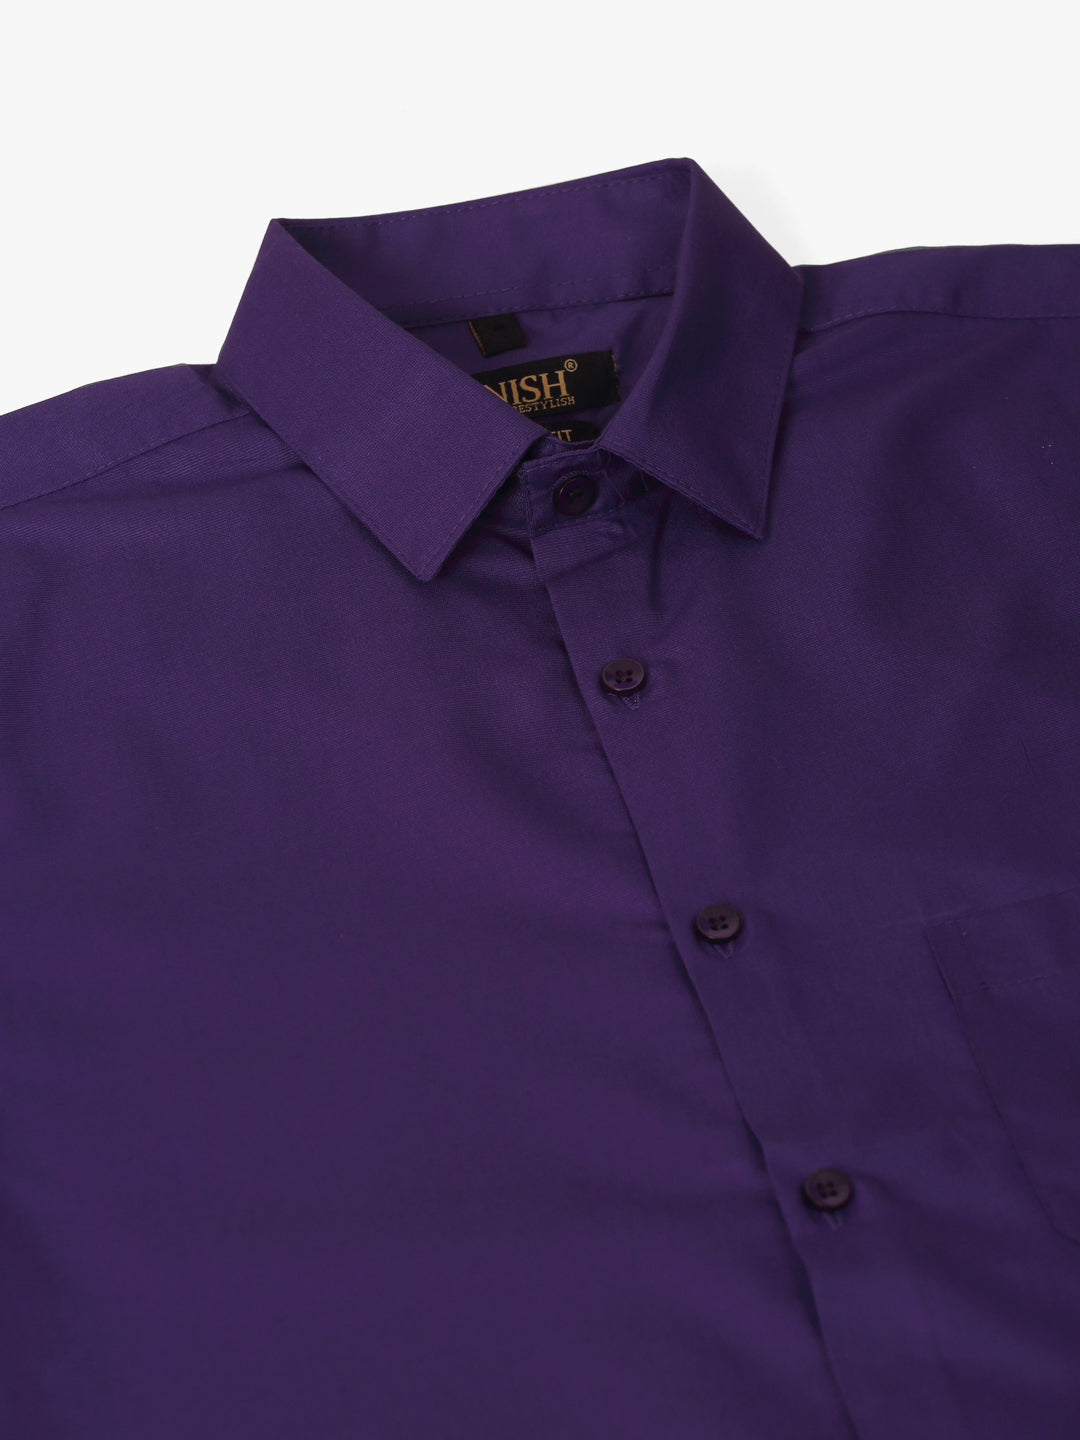 Men's Purple Formal Solid Shirts